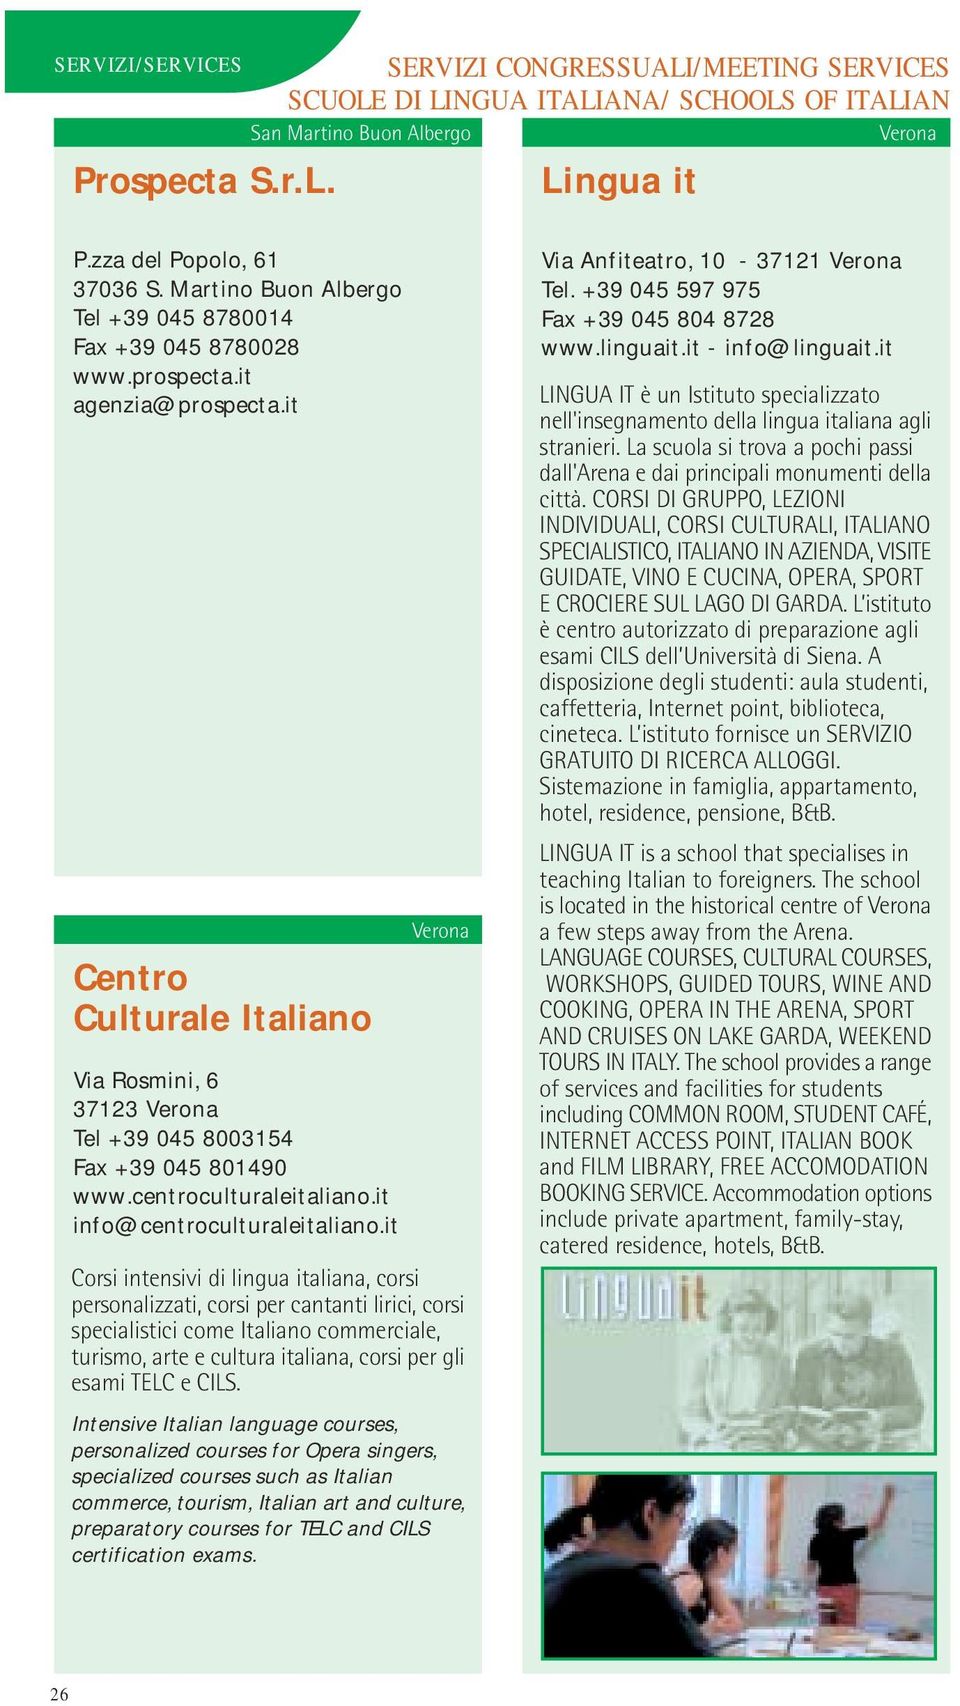 centroculturaleitaliano.it info@centroculturaleitaliano.